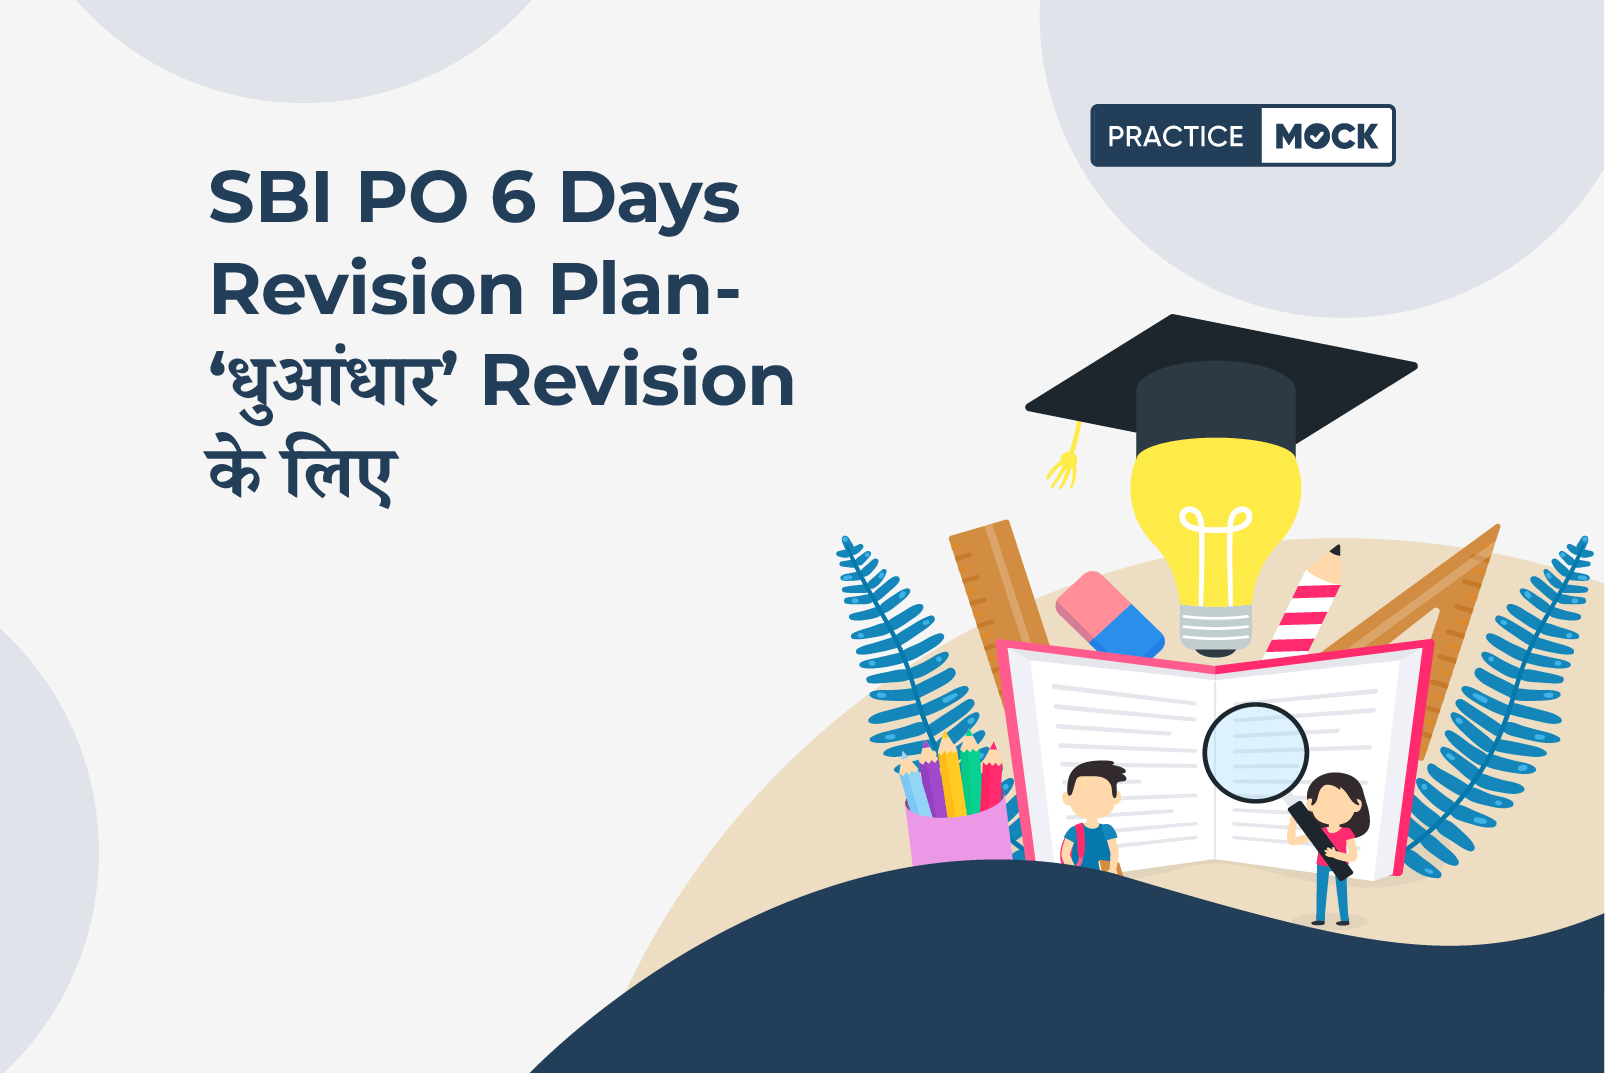 SBI PO 6 Days Revision Plan- 'धुआंधार' Revision के लिए (1)